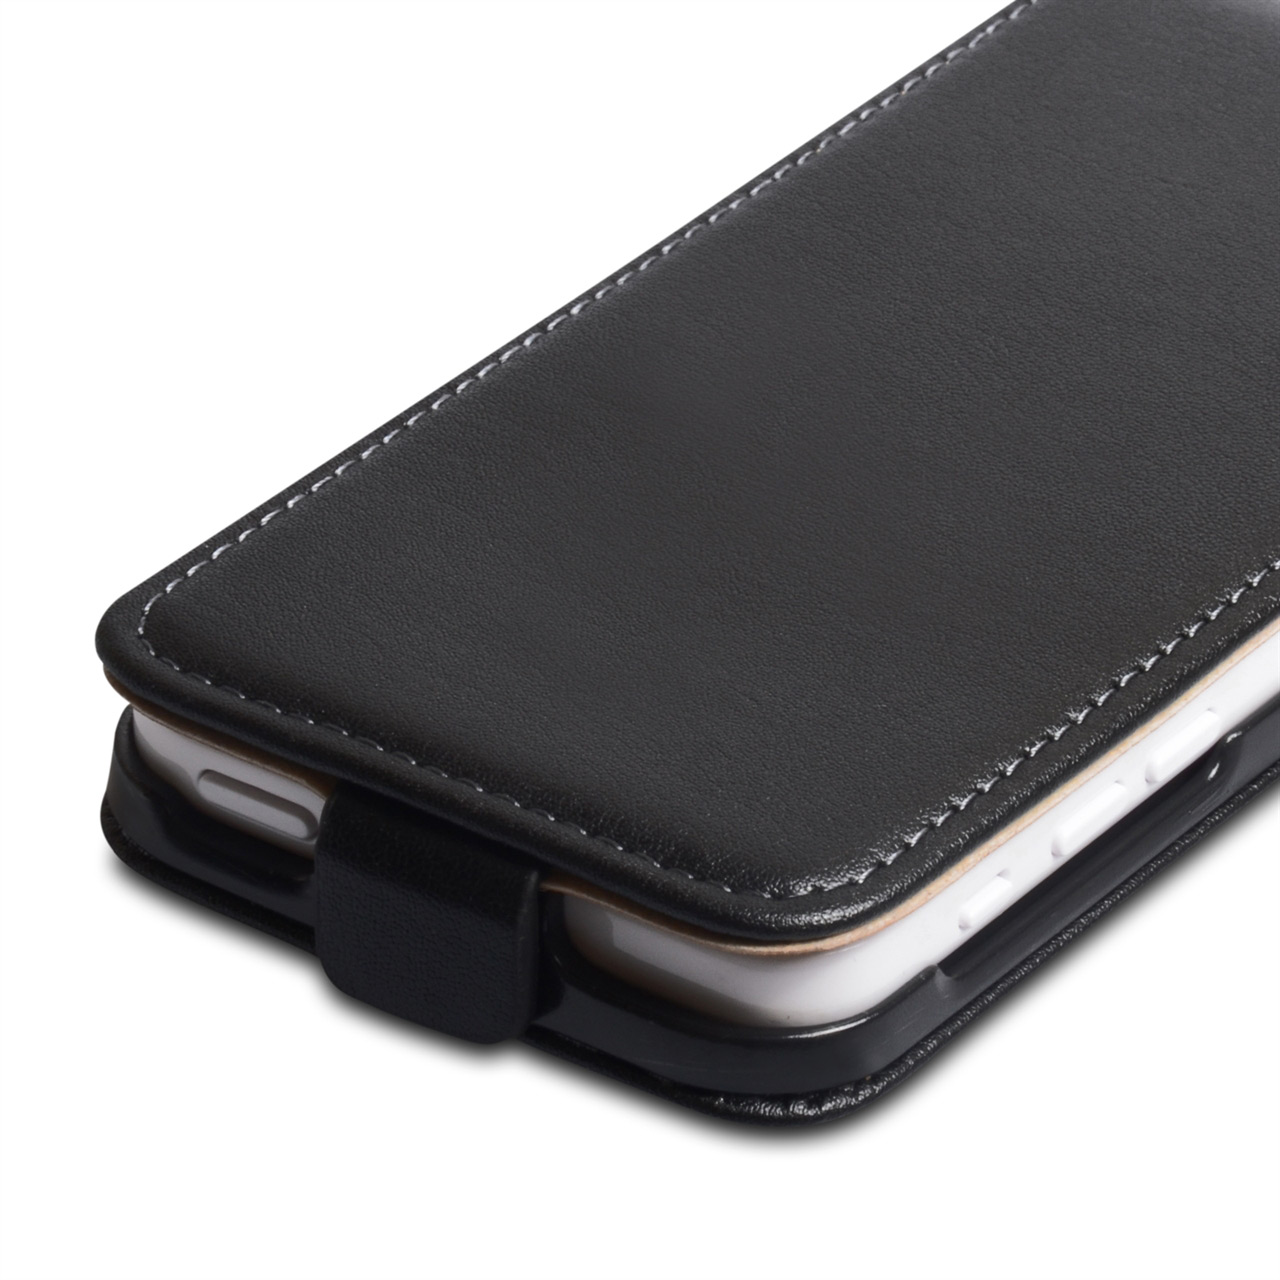 Caseflex iPhone 5C Real Leather Flip Case - Black